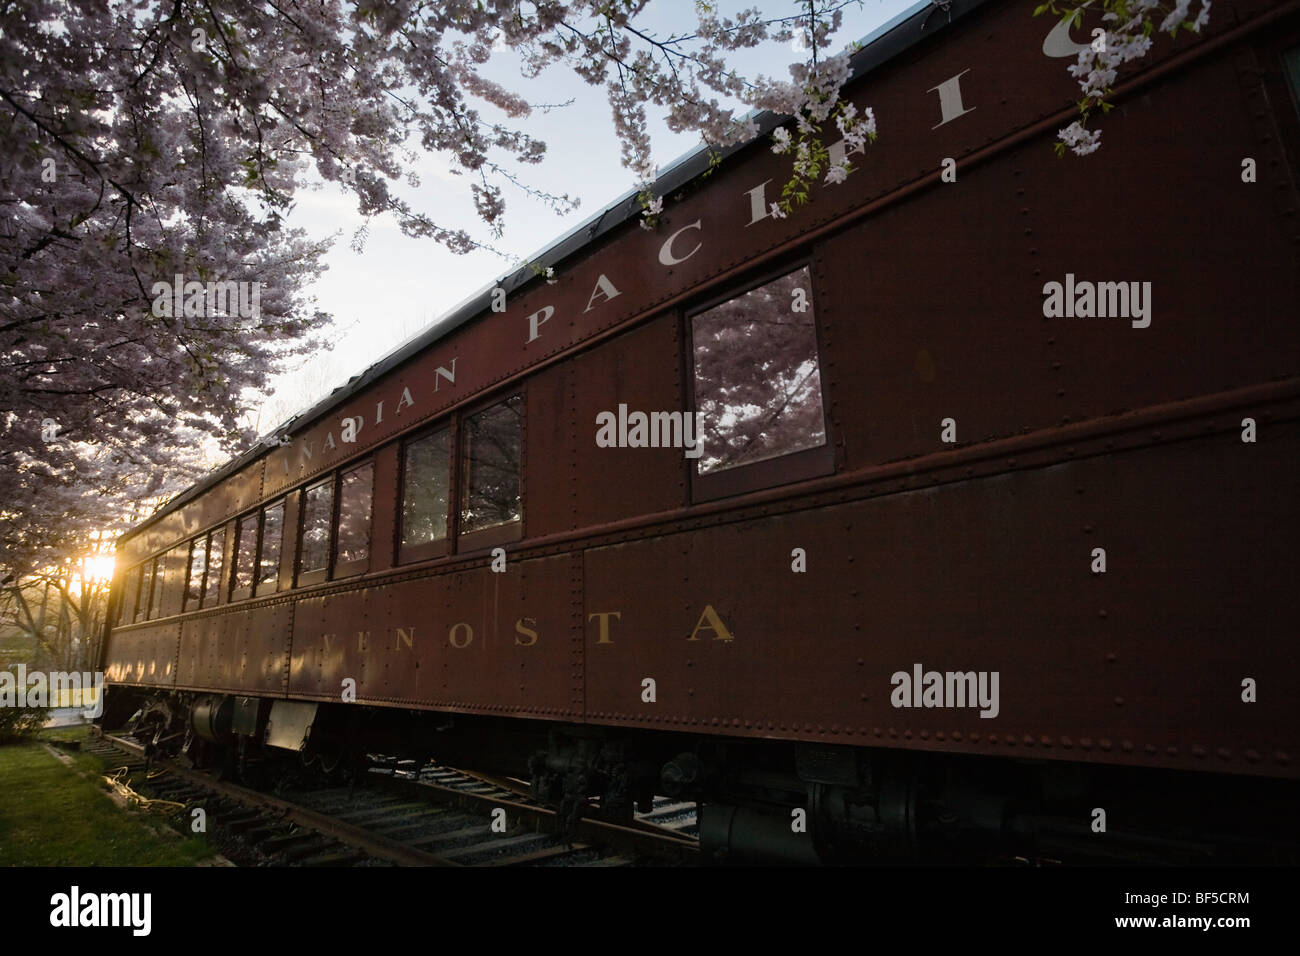 The Venosta, a restored sleeping car train at Port Moody Station Museum, Port Moody, British Columbia, Canada Stock Photo